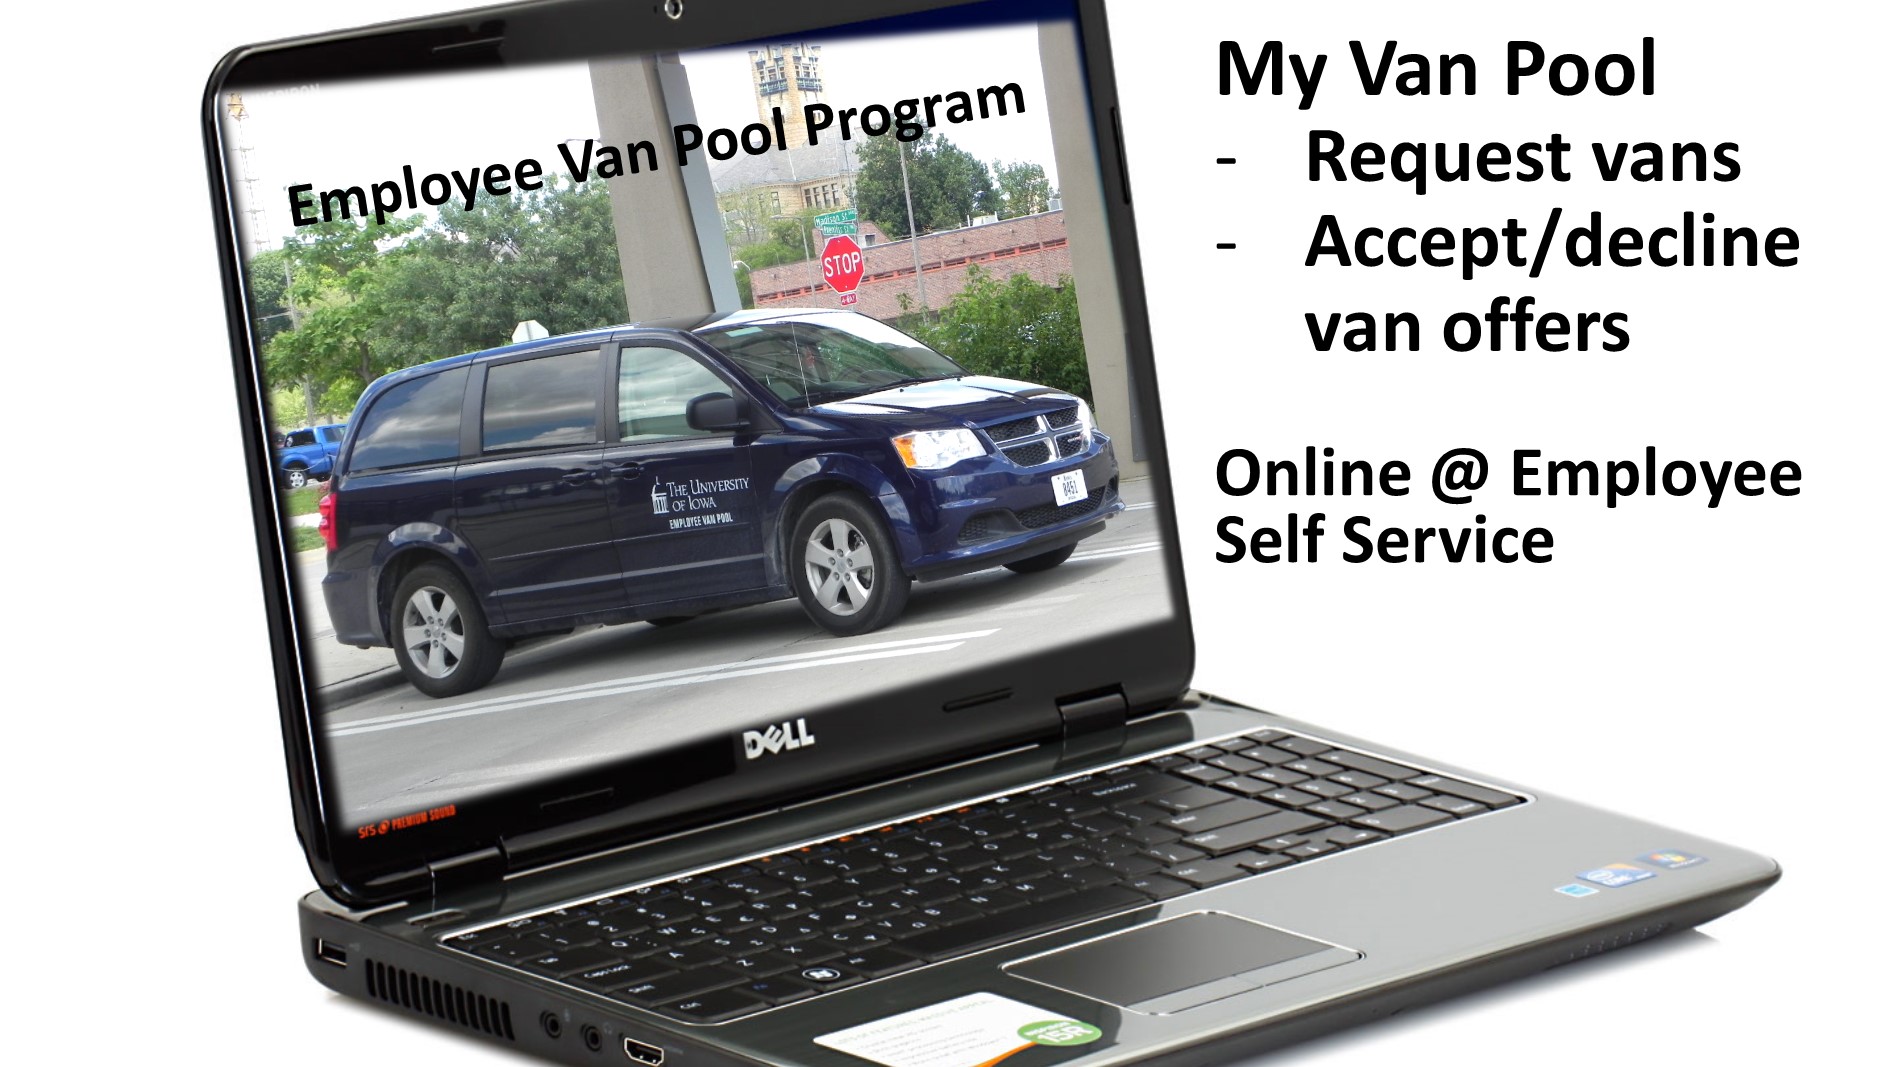 Use My Van Pool to request vans online at Employee Self Service